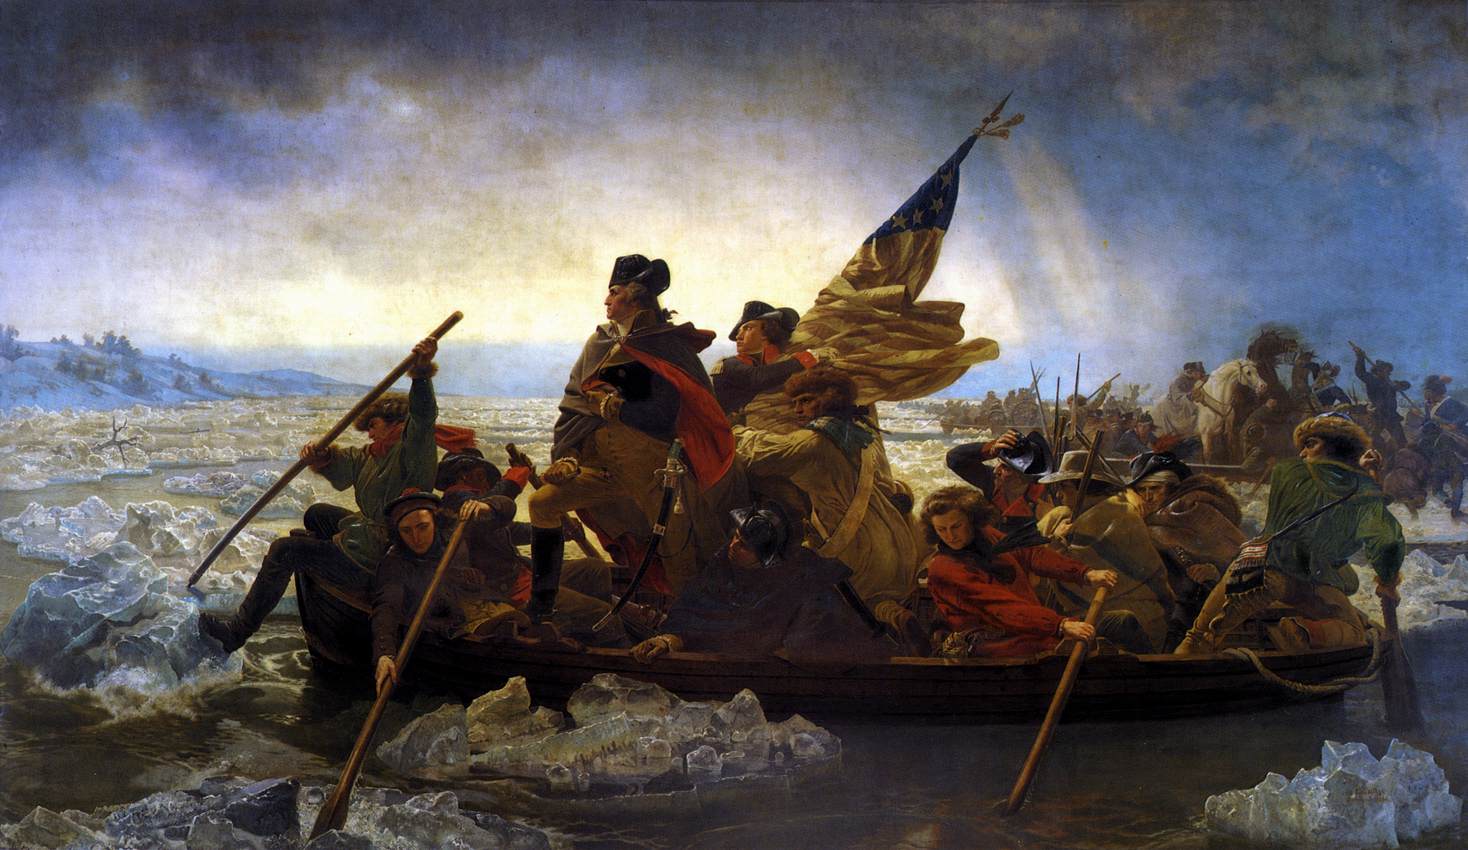 Washington Crossing The Delaware